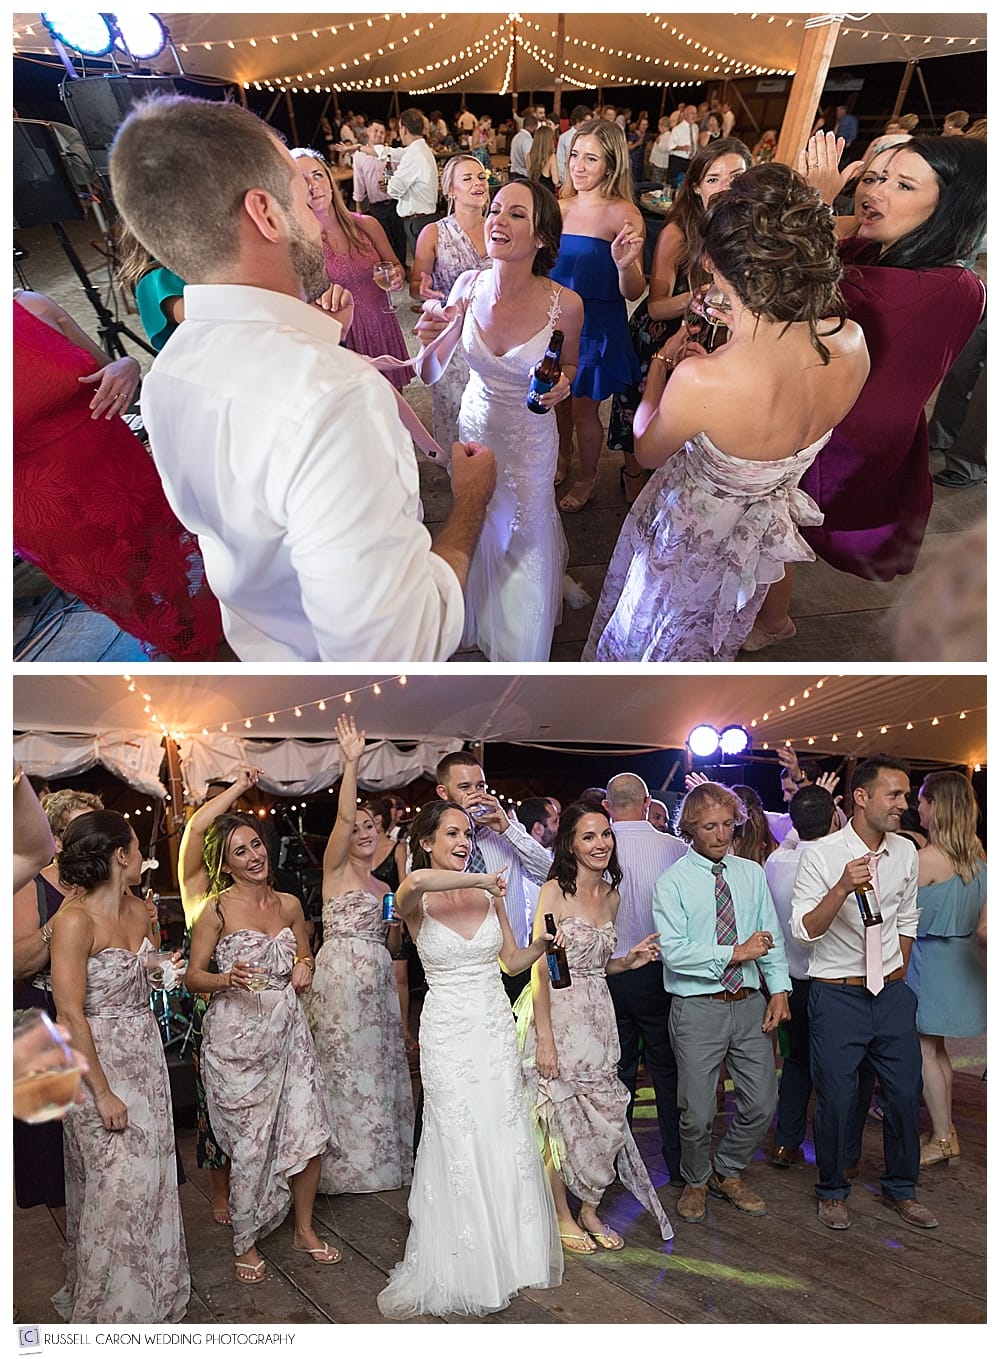 wedding reception dancing fun